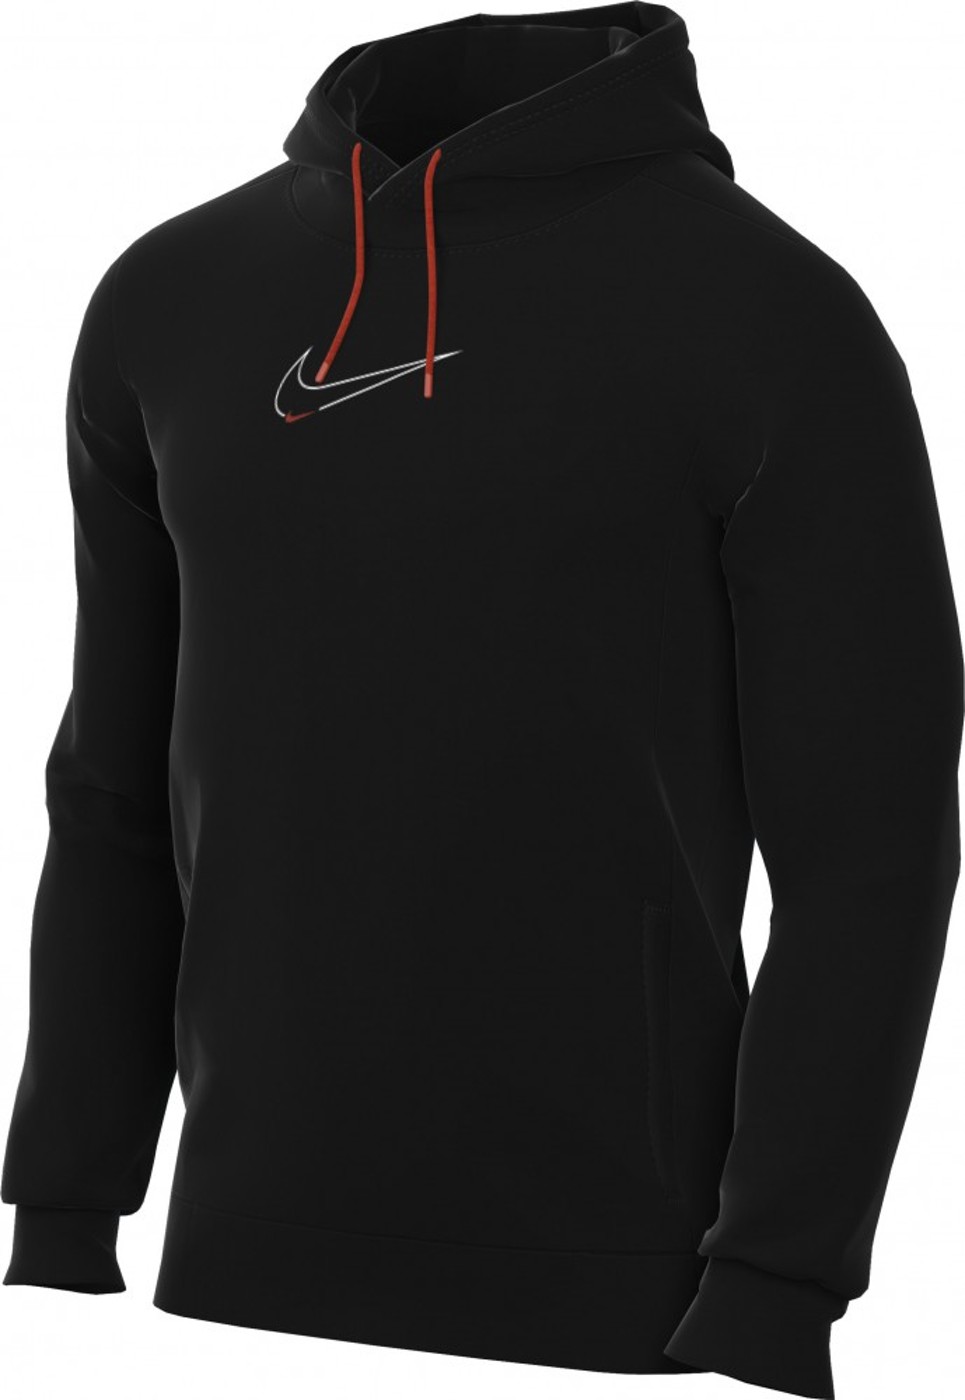 Nike Dri-FIT Long-Sleeve - Herren